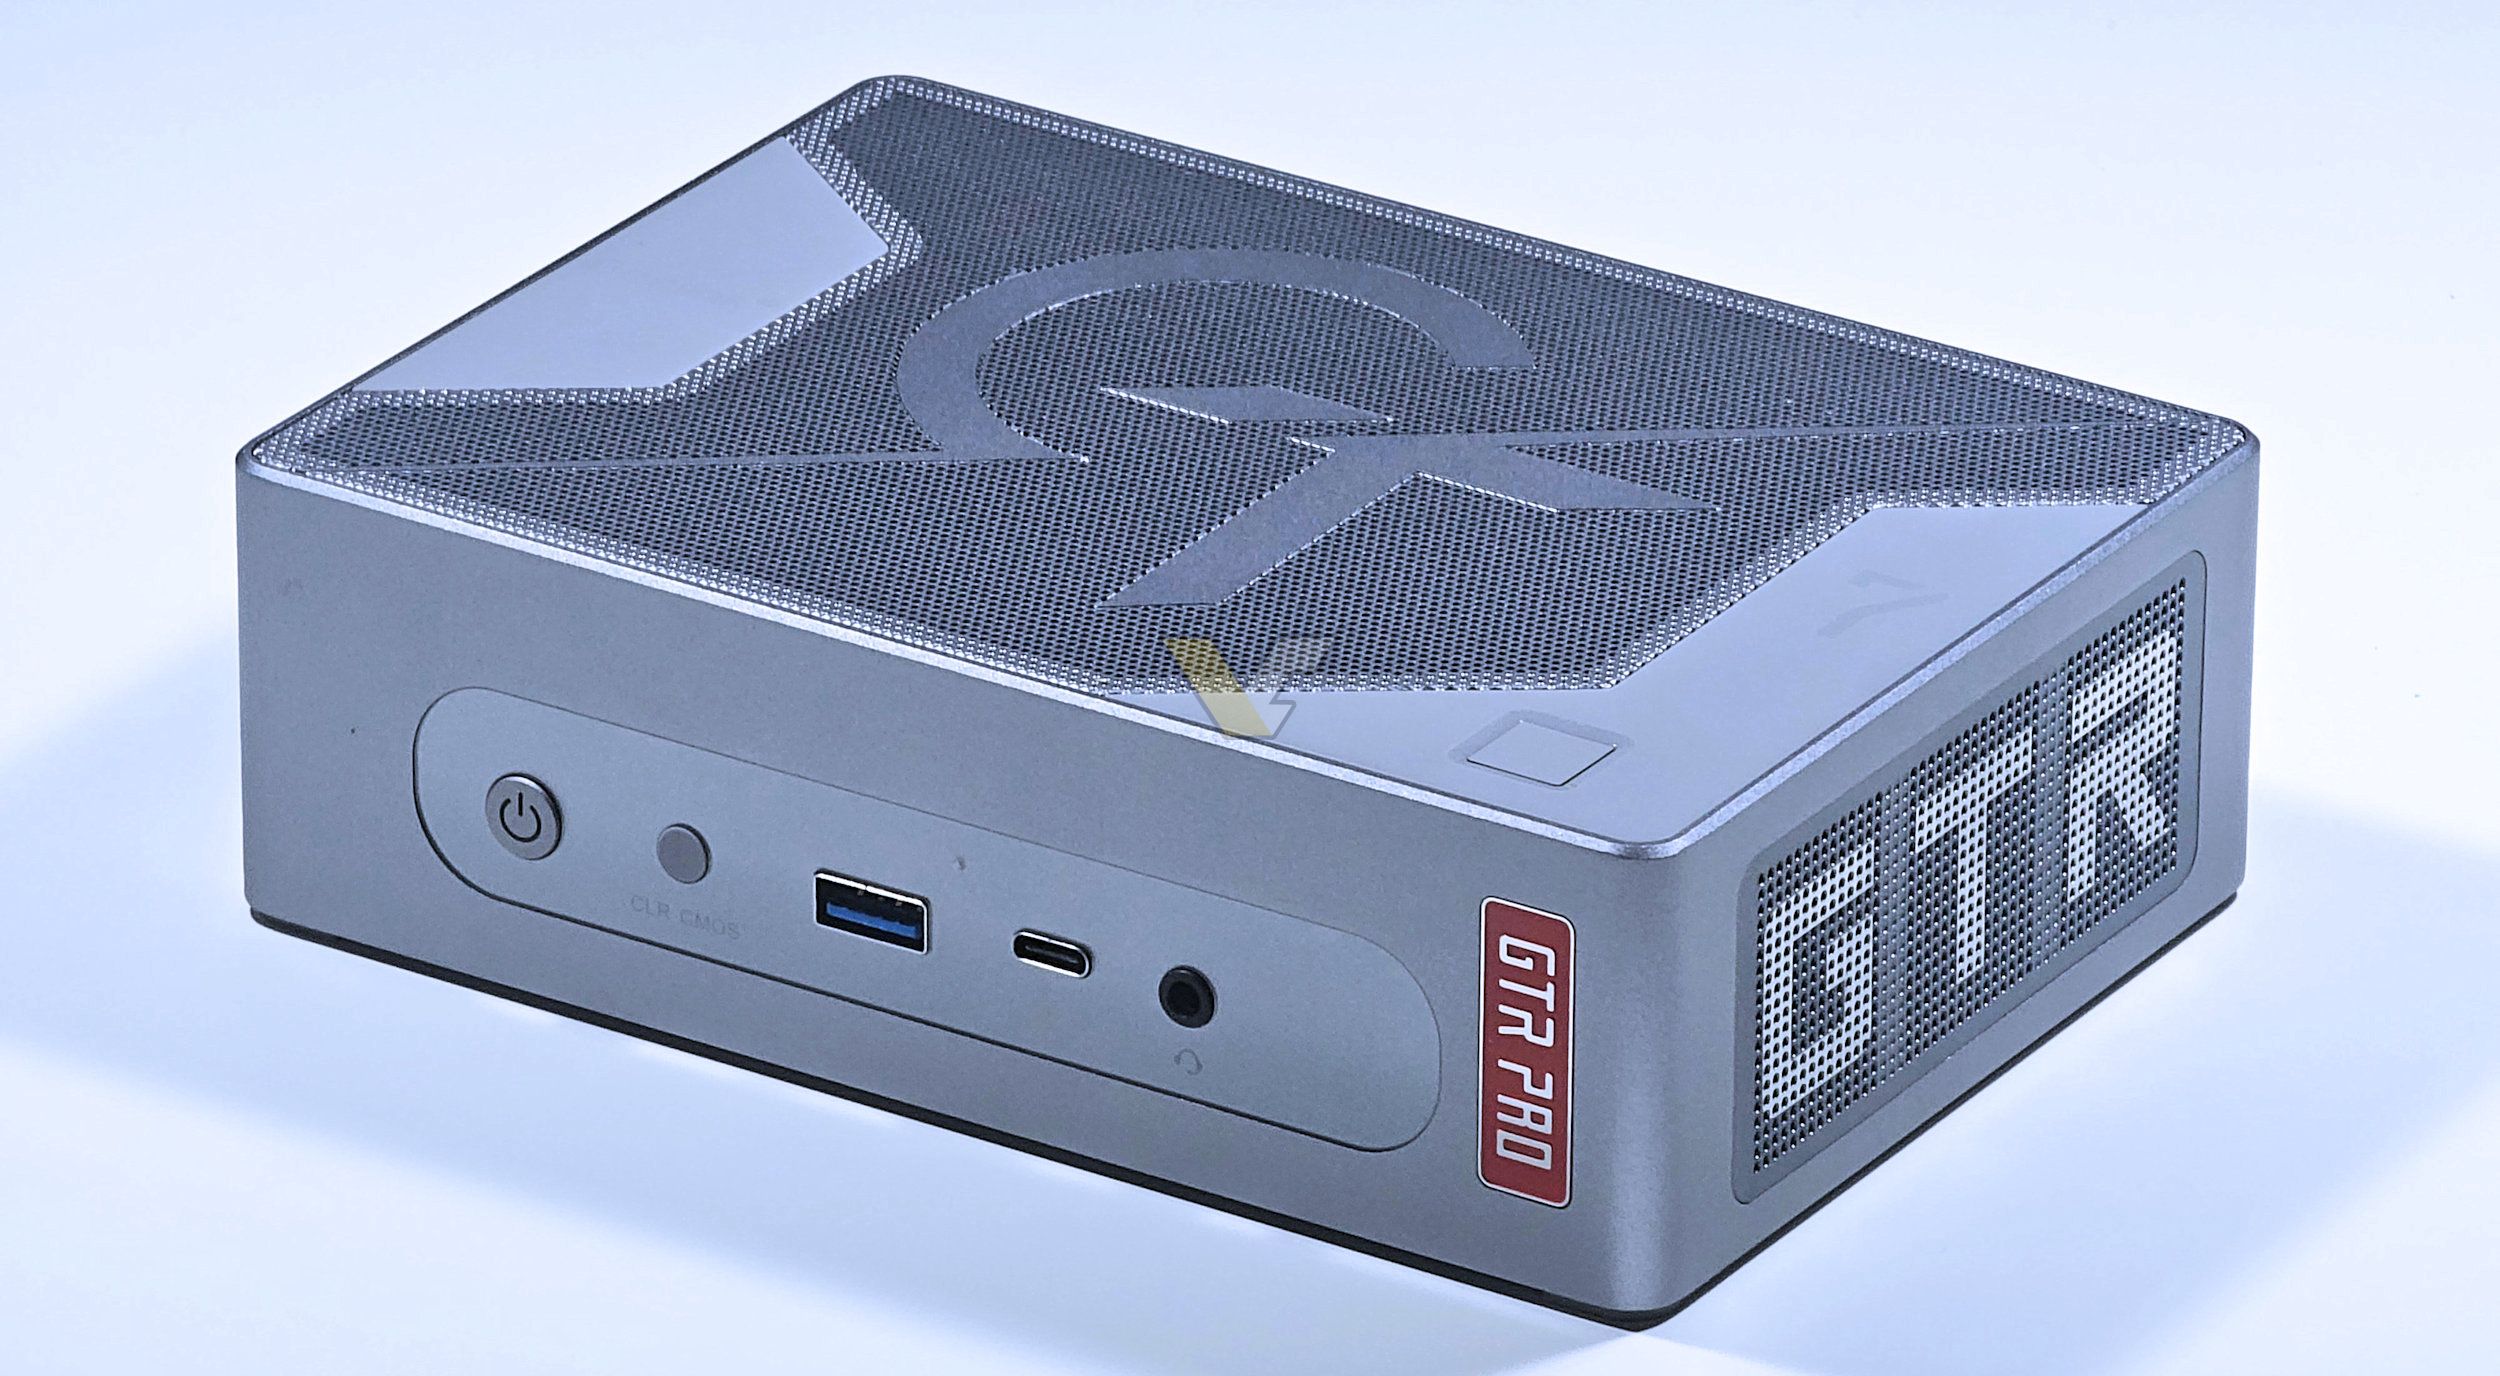 Beelink Introducing SER6 MAX 65W High Performance Gaming Mini PC